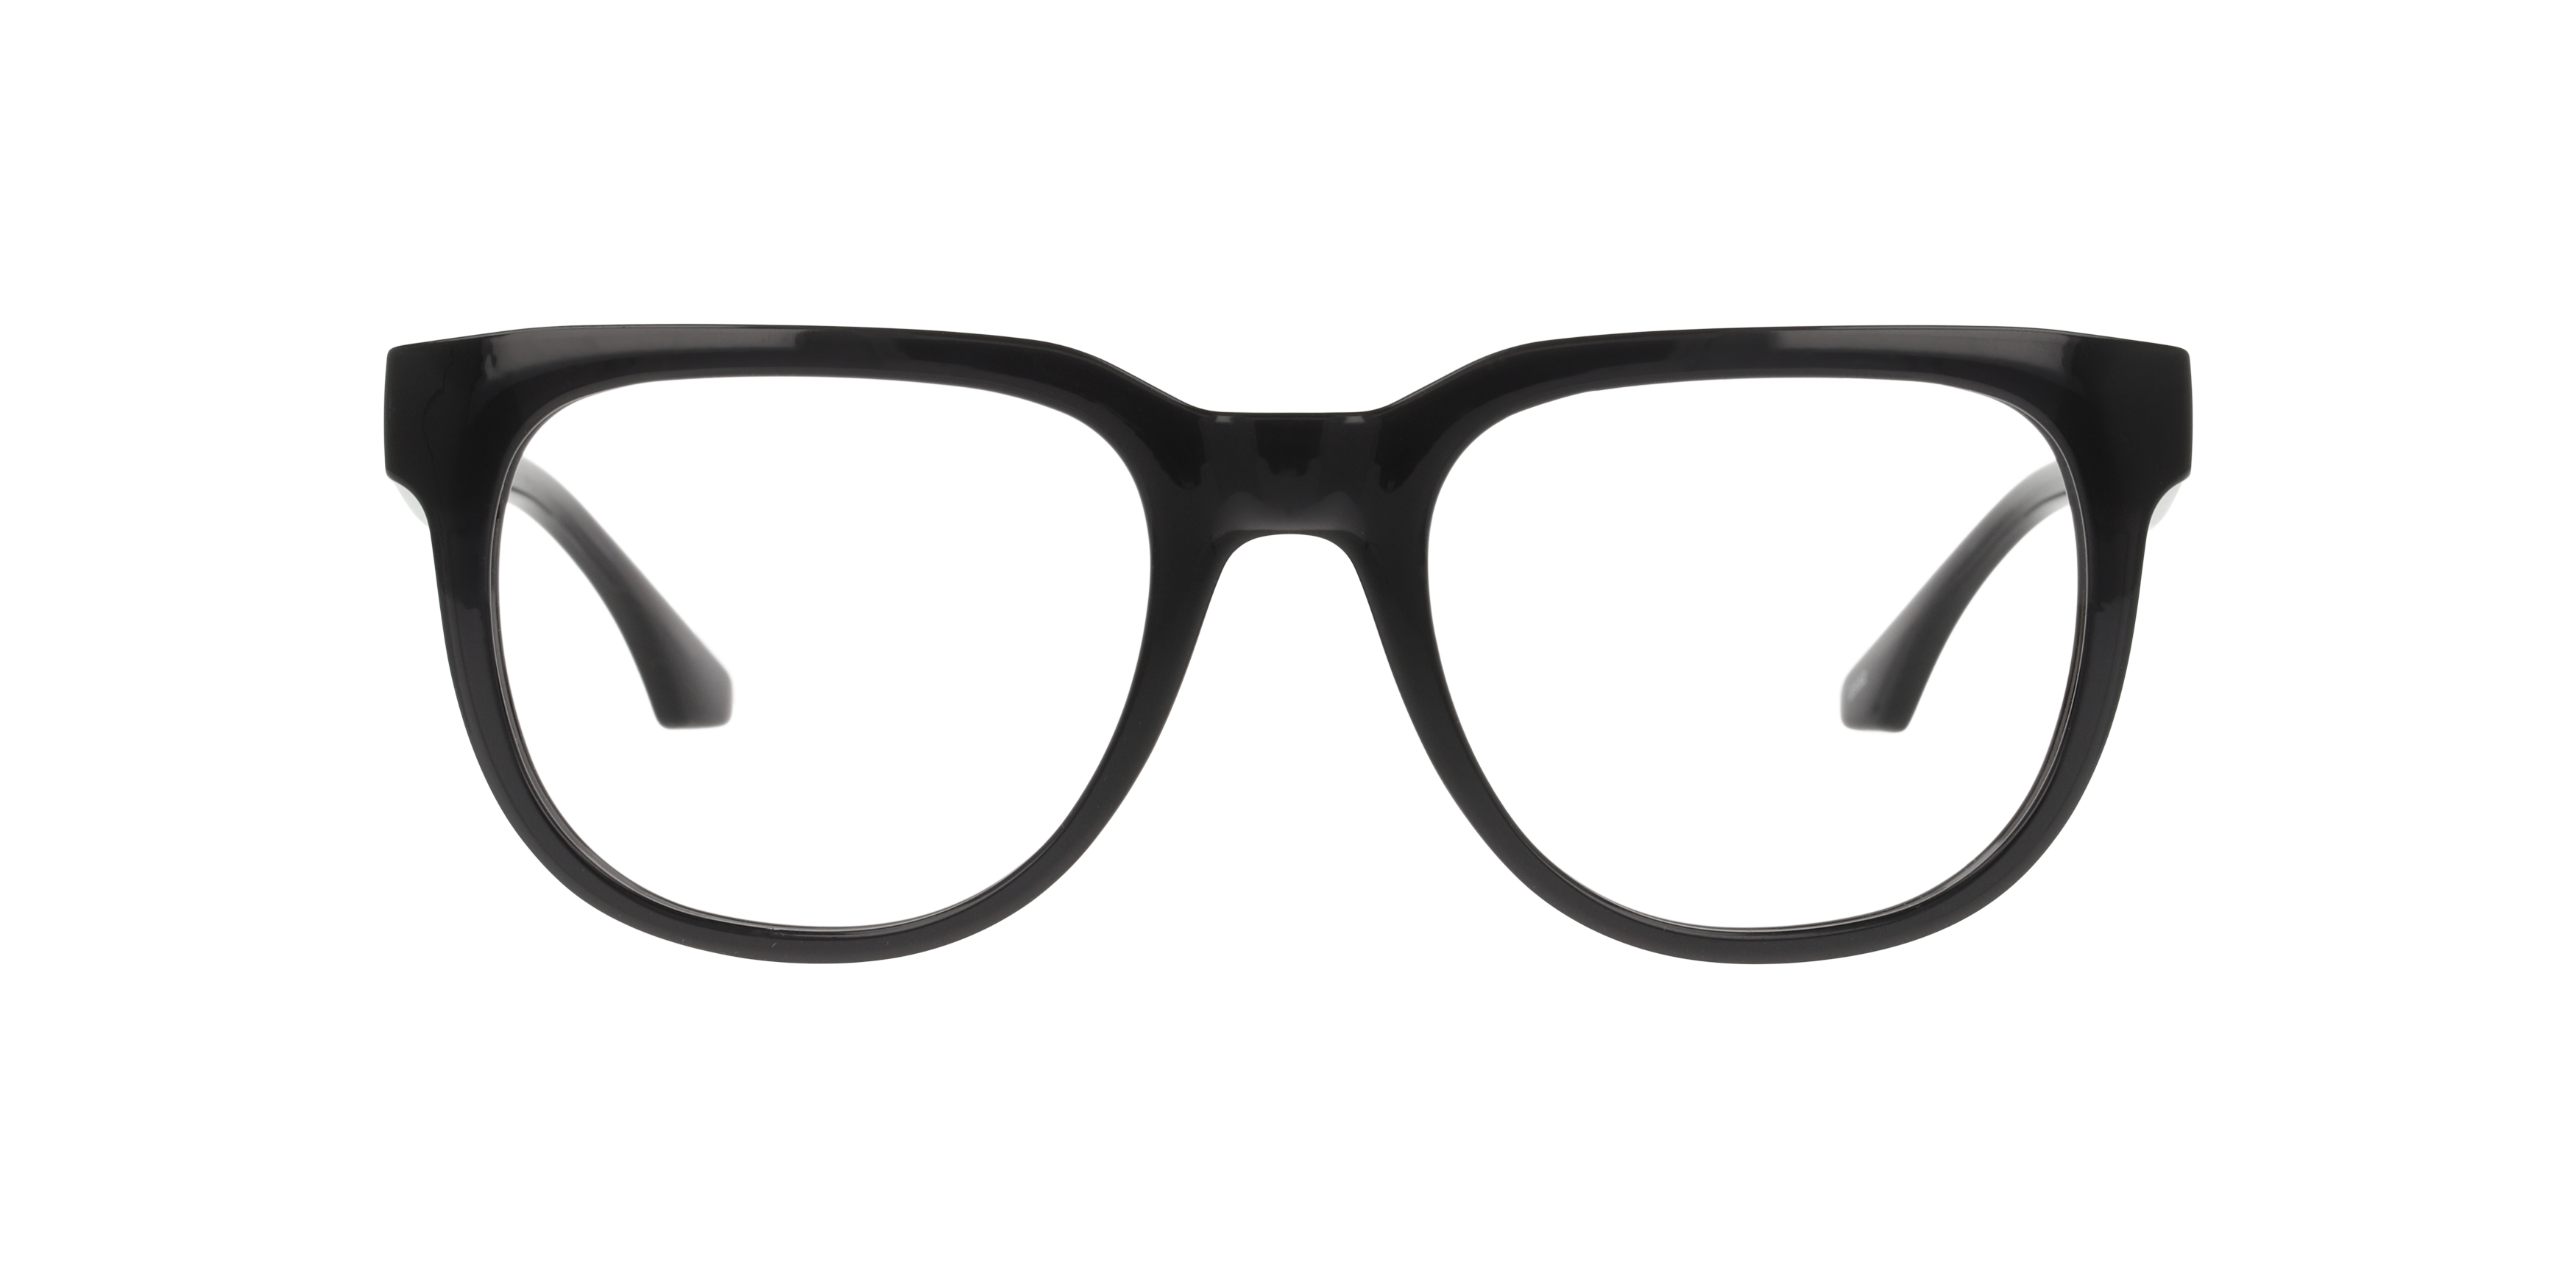 Front Unofficial UO3047 Glasses Transparent / Transparent, Brown